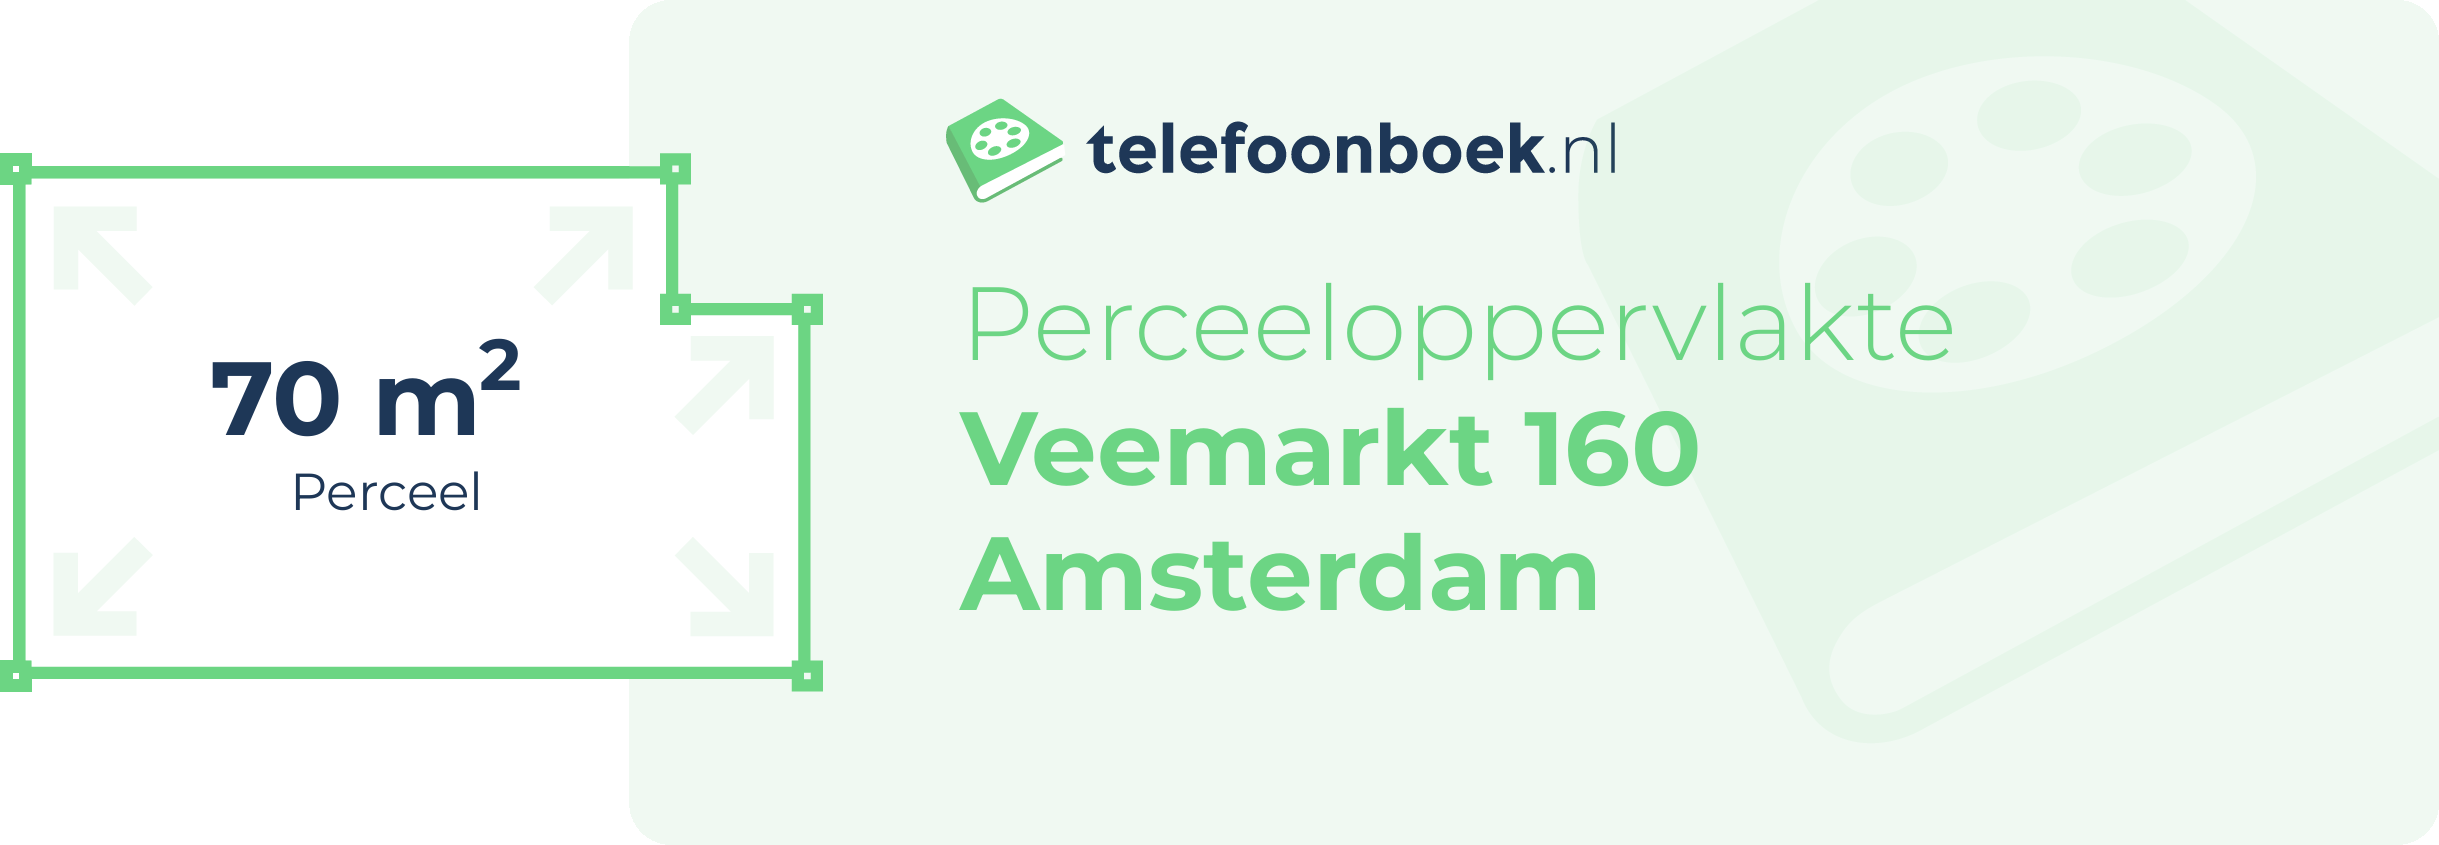 Perceeloppervlakte Veemarkt 160 Amsterdam